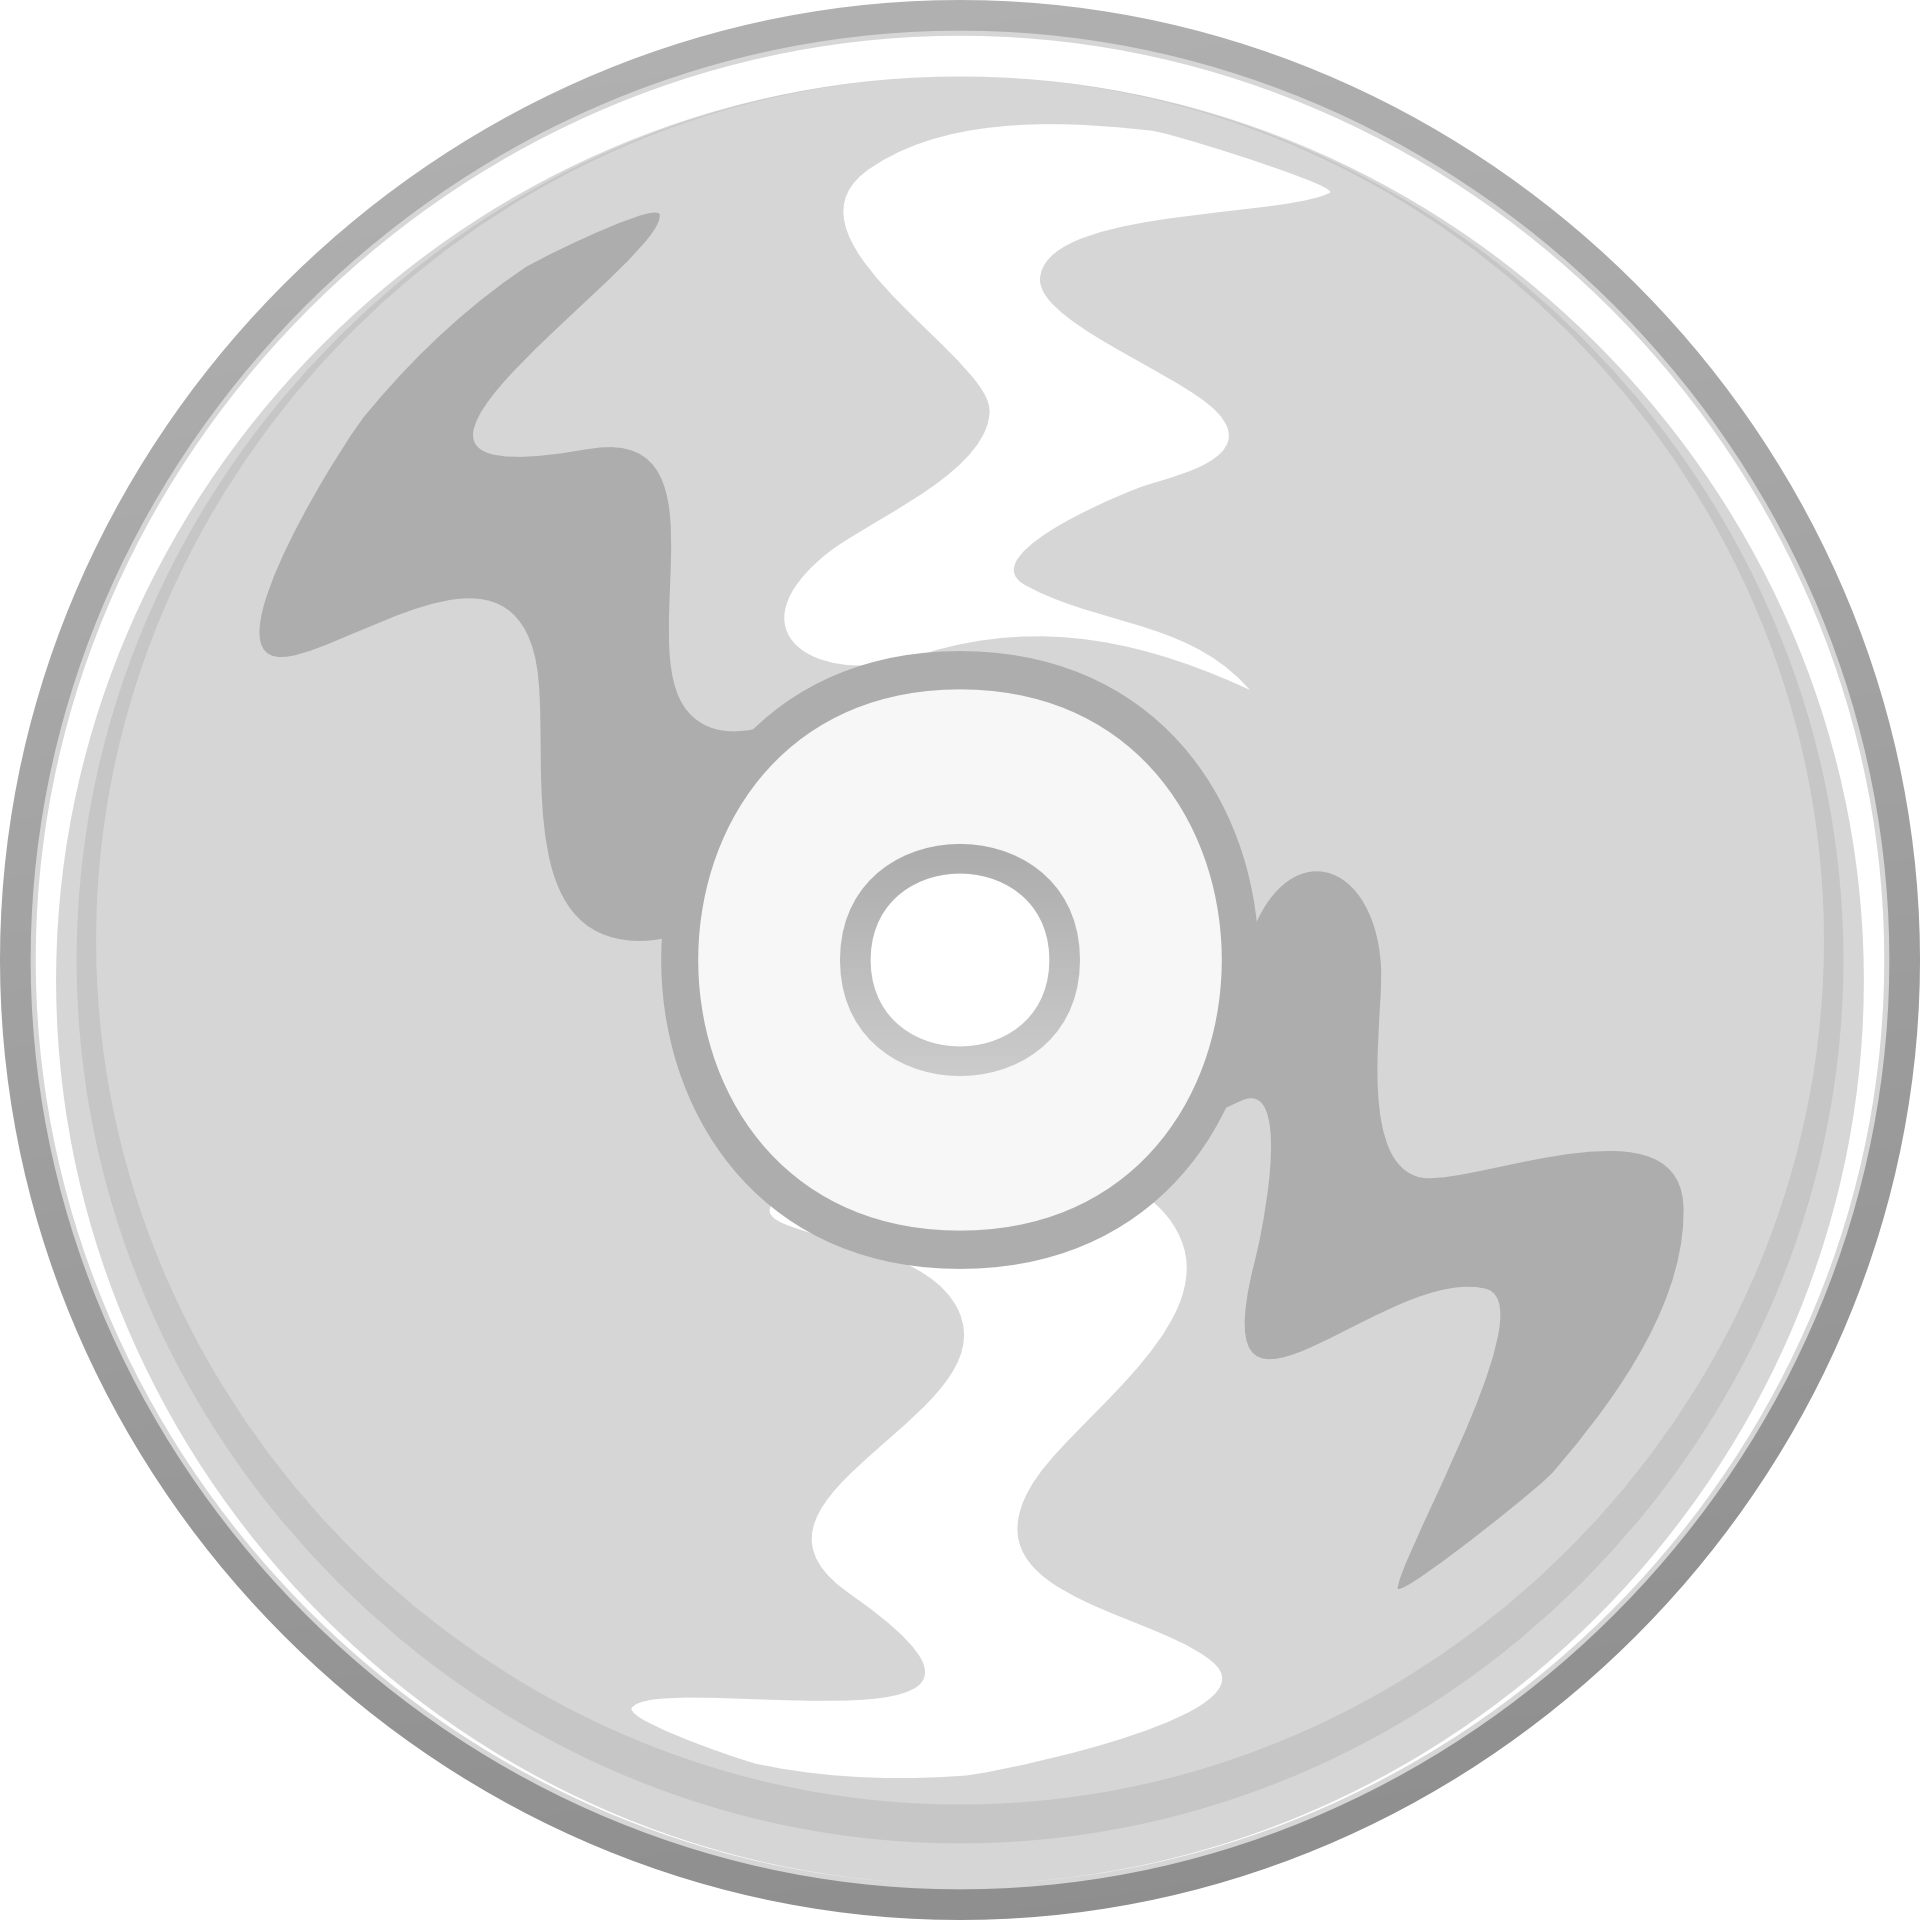 Лого диск. Логотип дисков. Рисунки на дисках. Компакт диск вектор. Рисование на дисках.